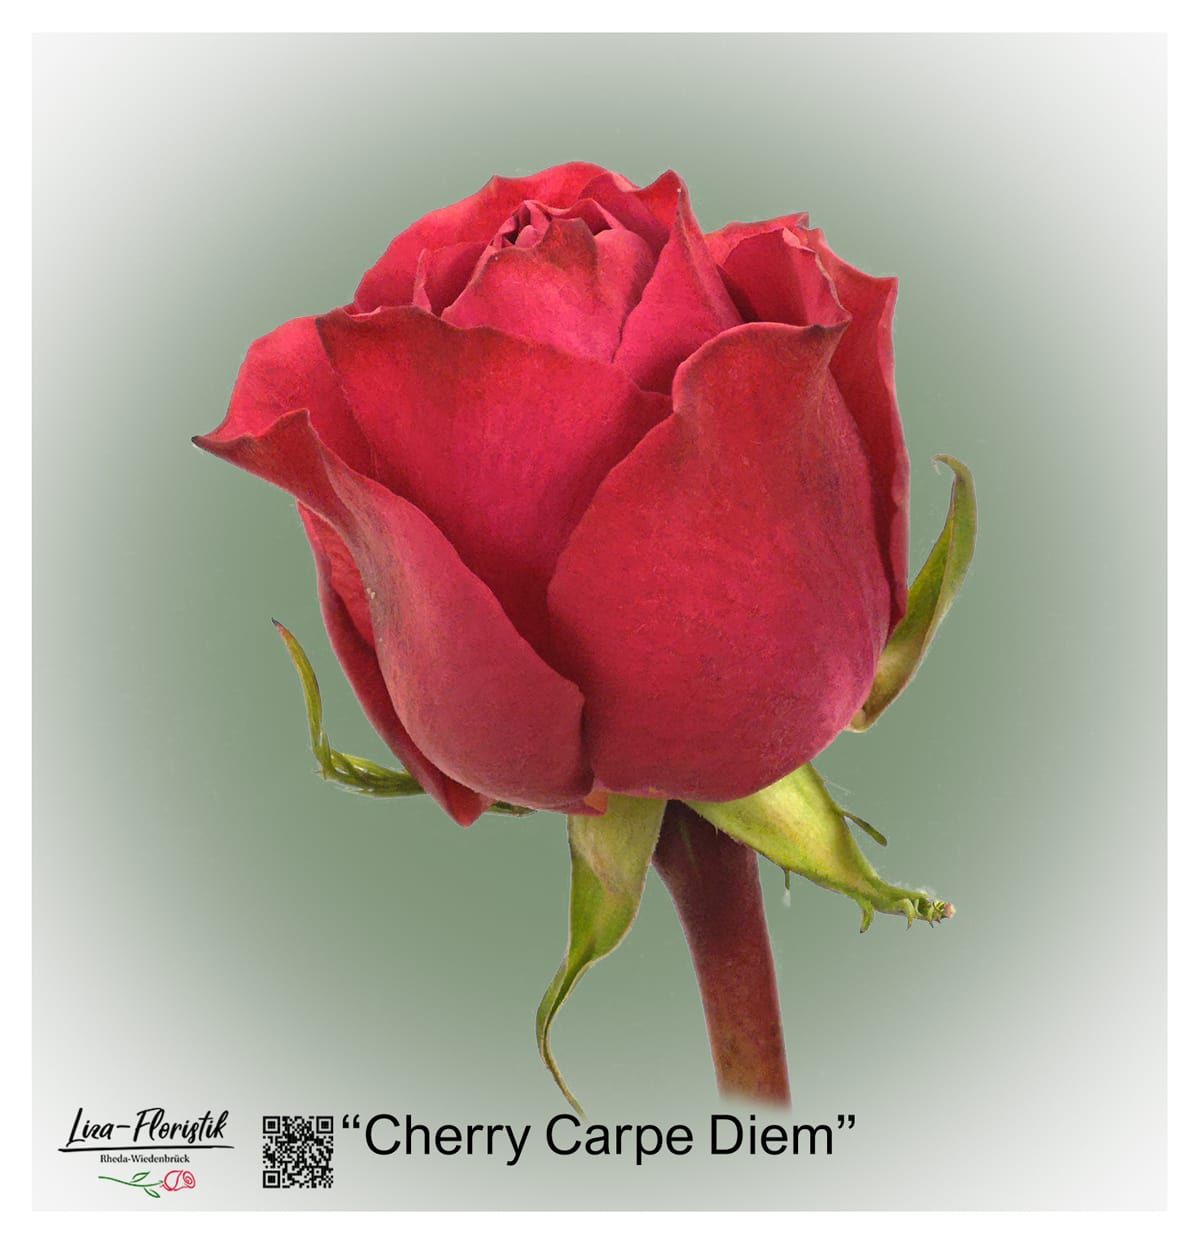 Ecuador Rose Cherry Carpe Diem